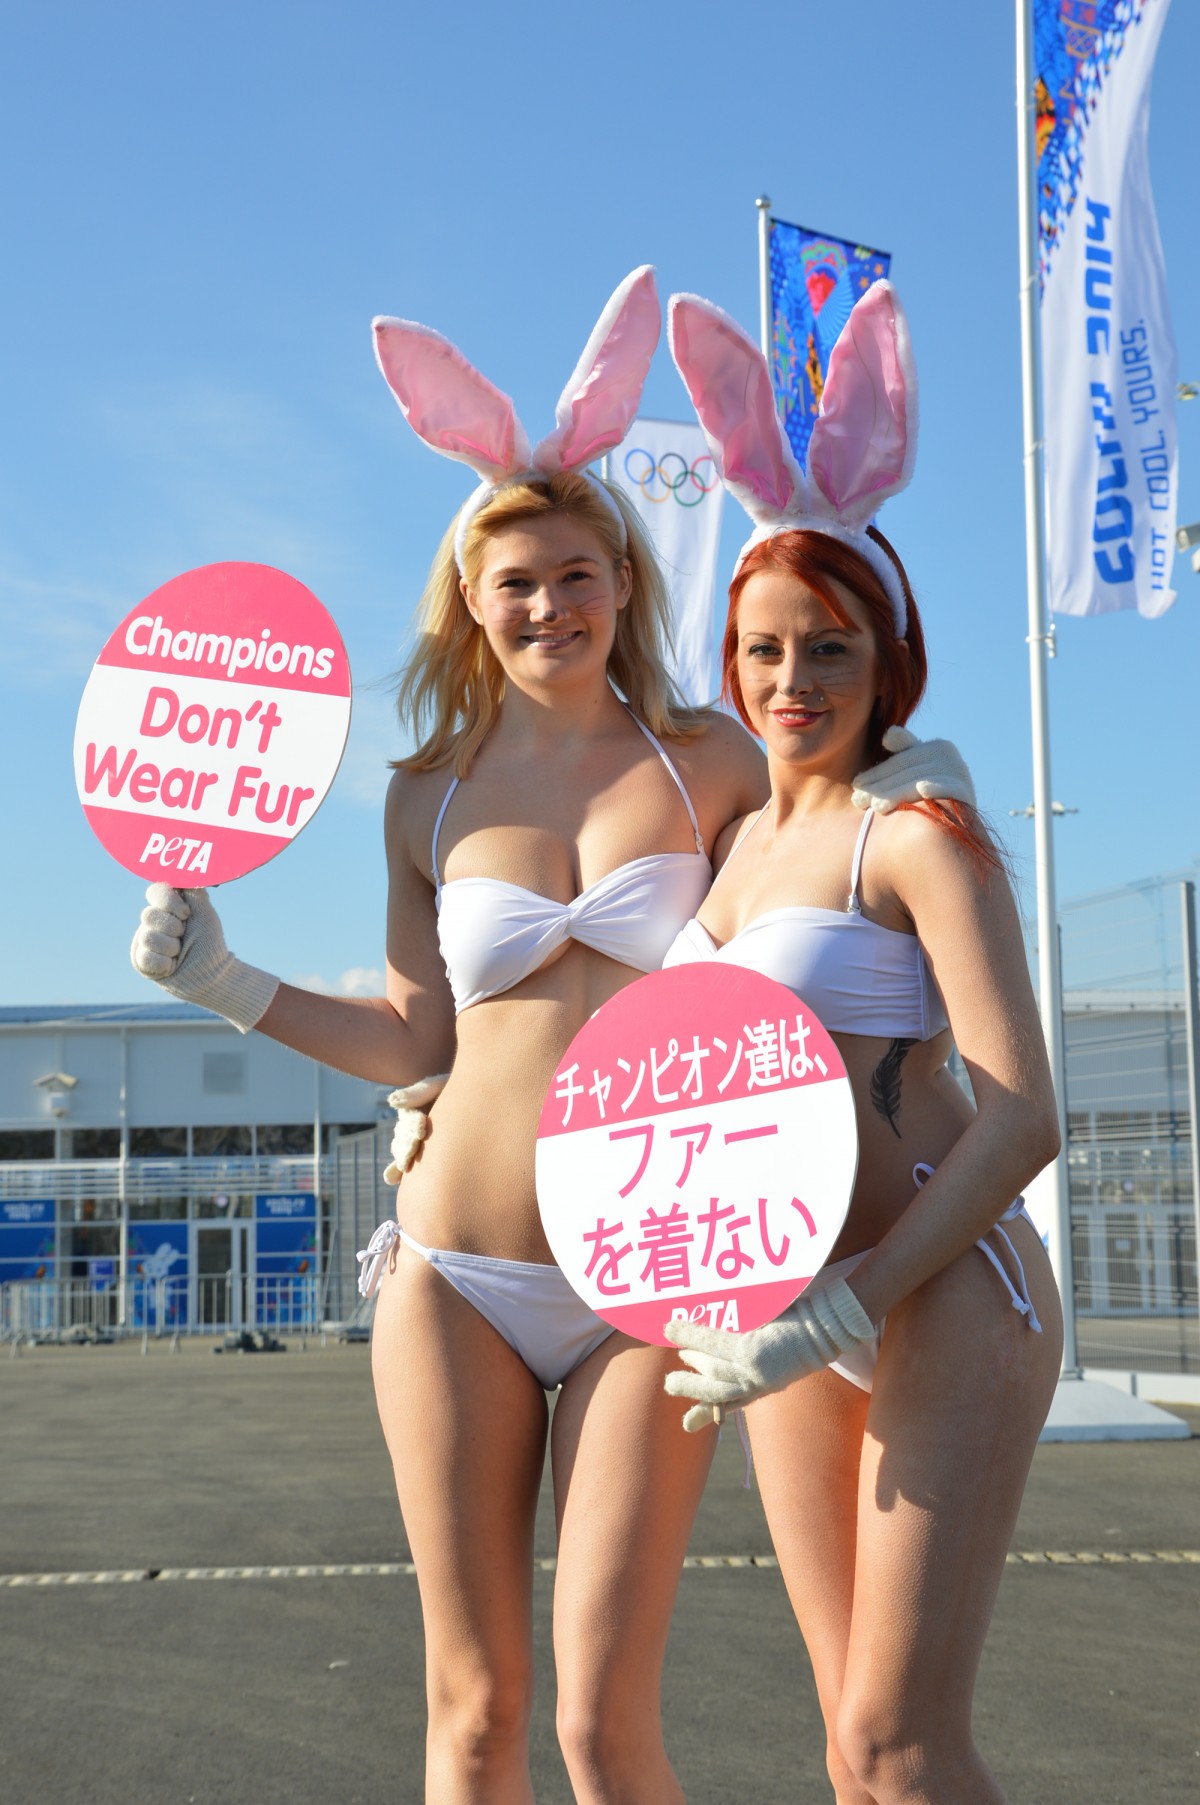 Sochi rabbit protest